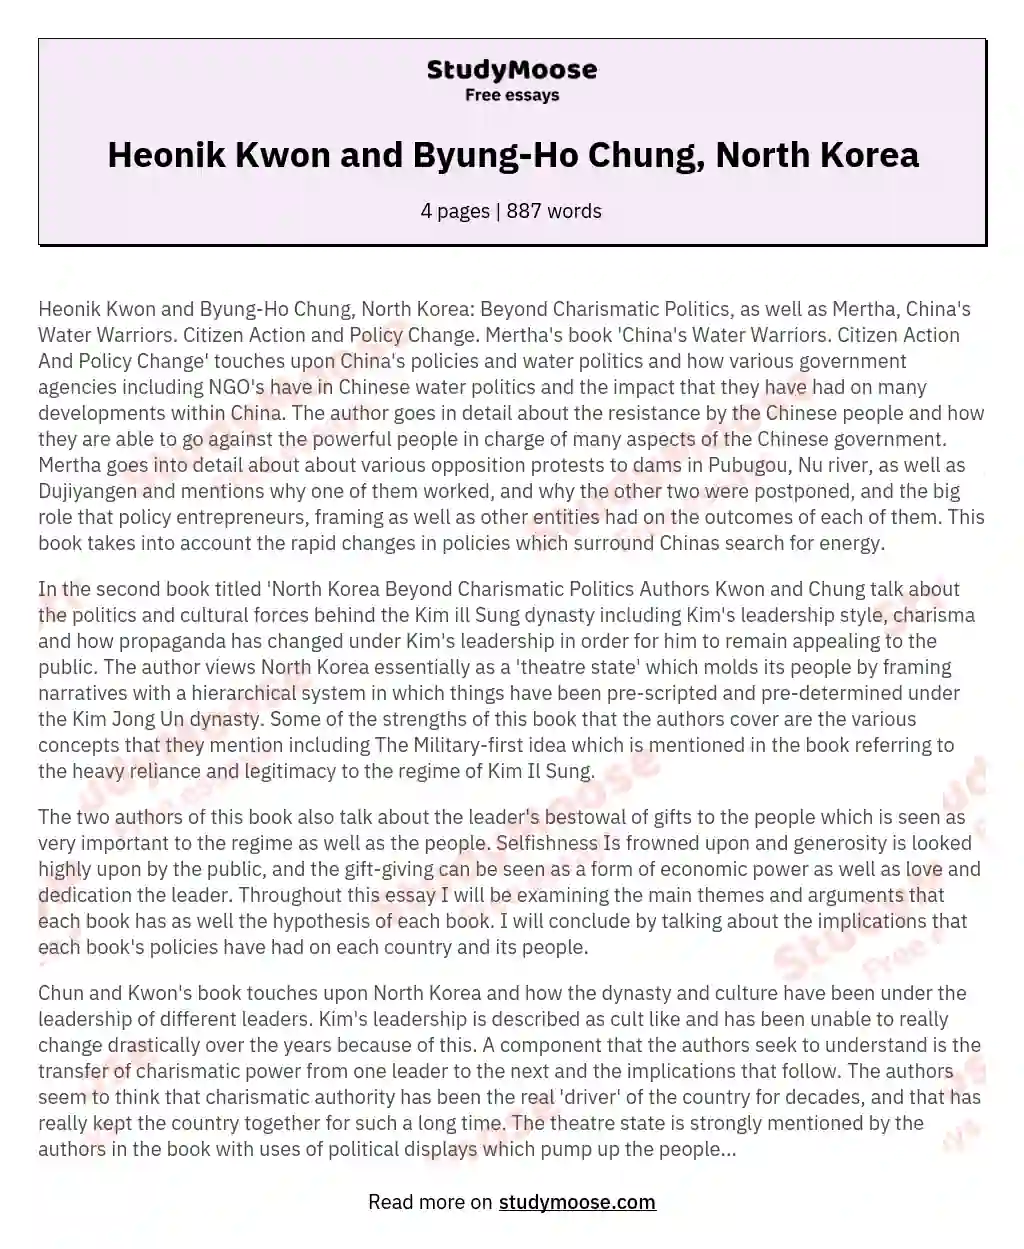 1984 and north korea essay